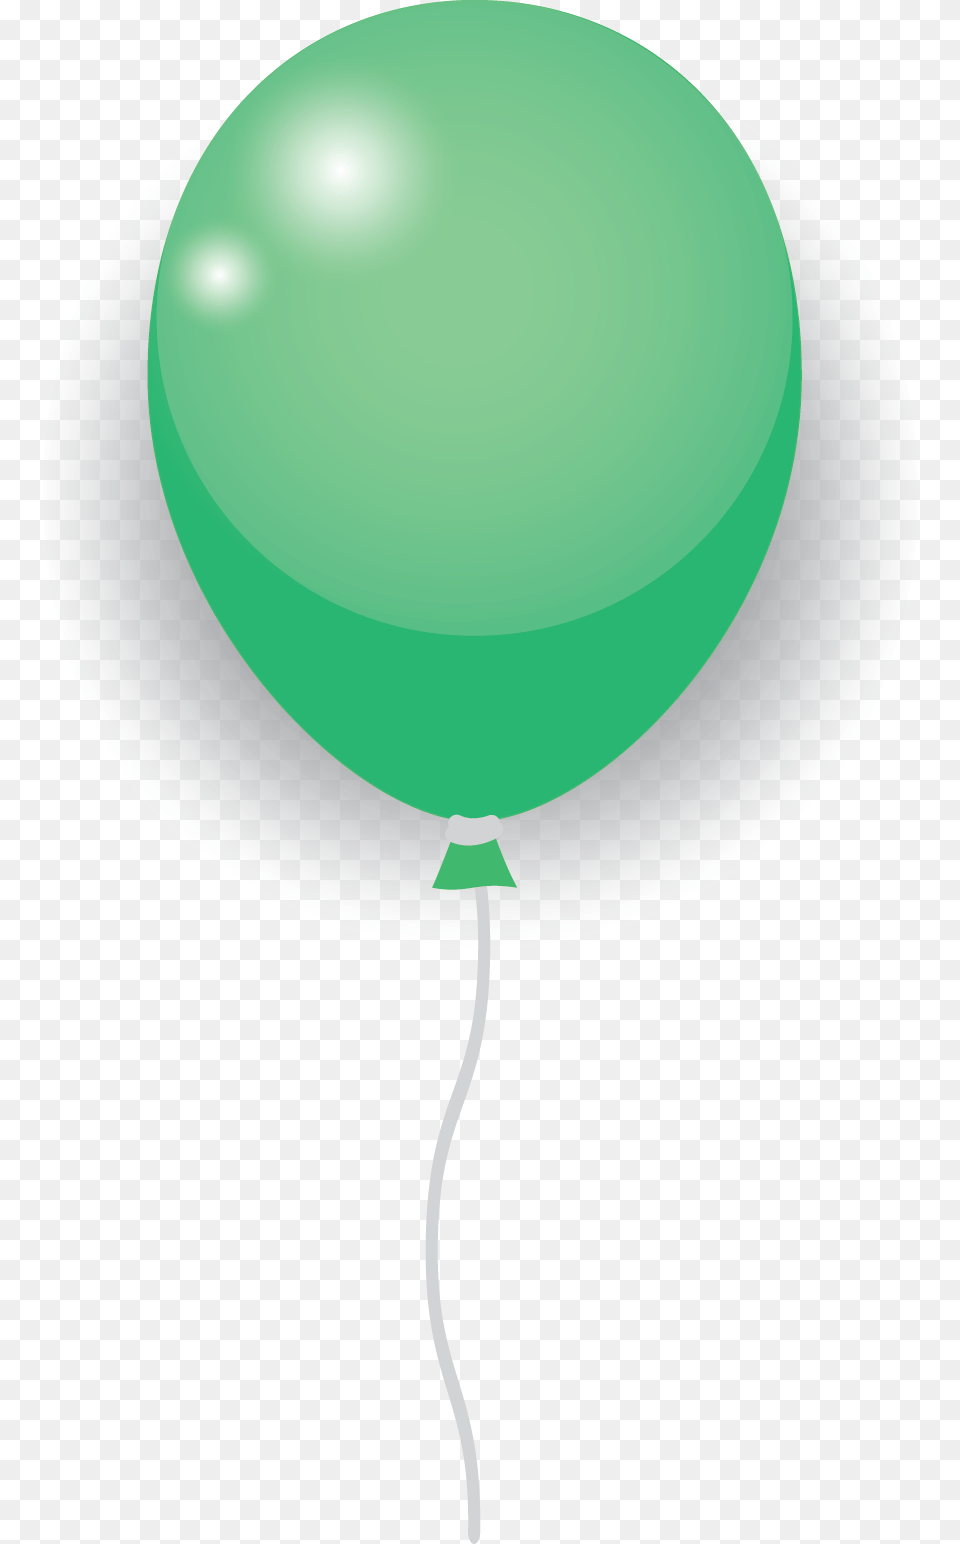 Green Balloon Png Image